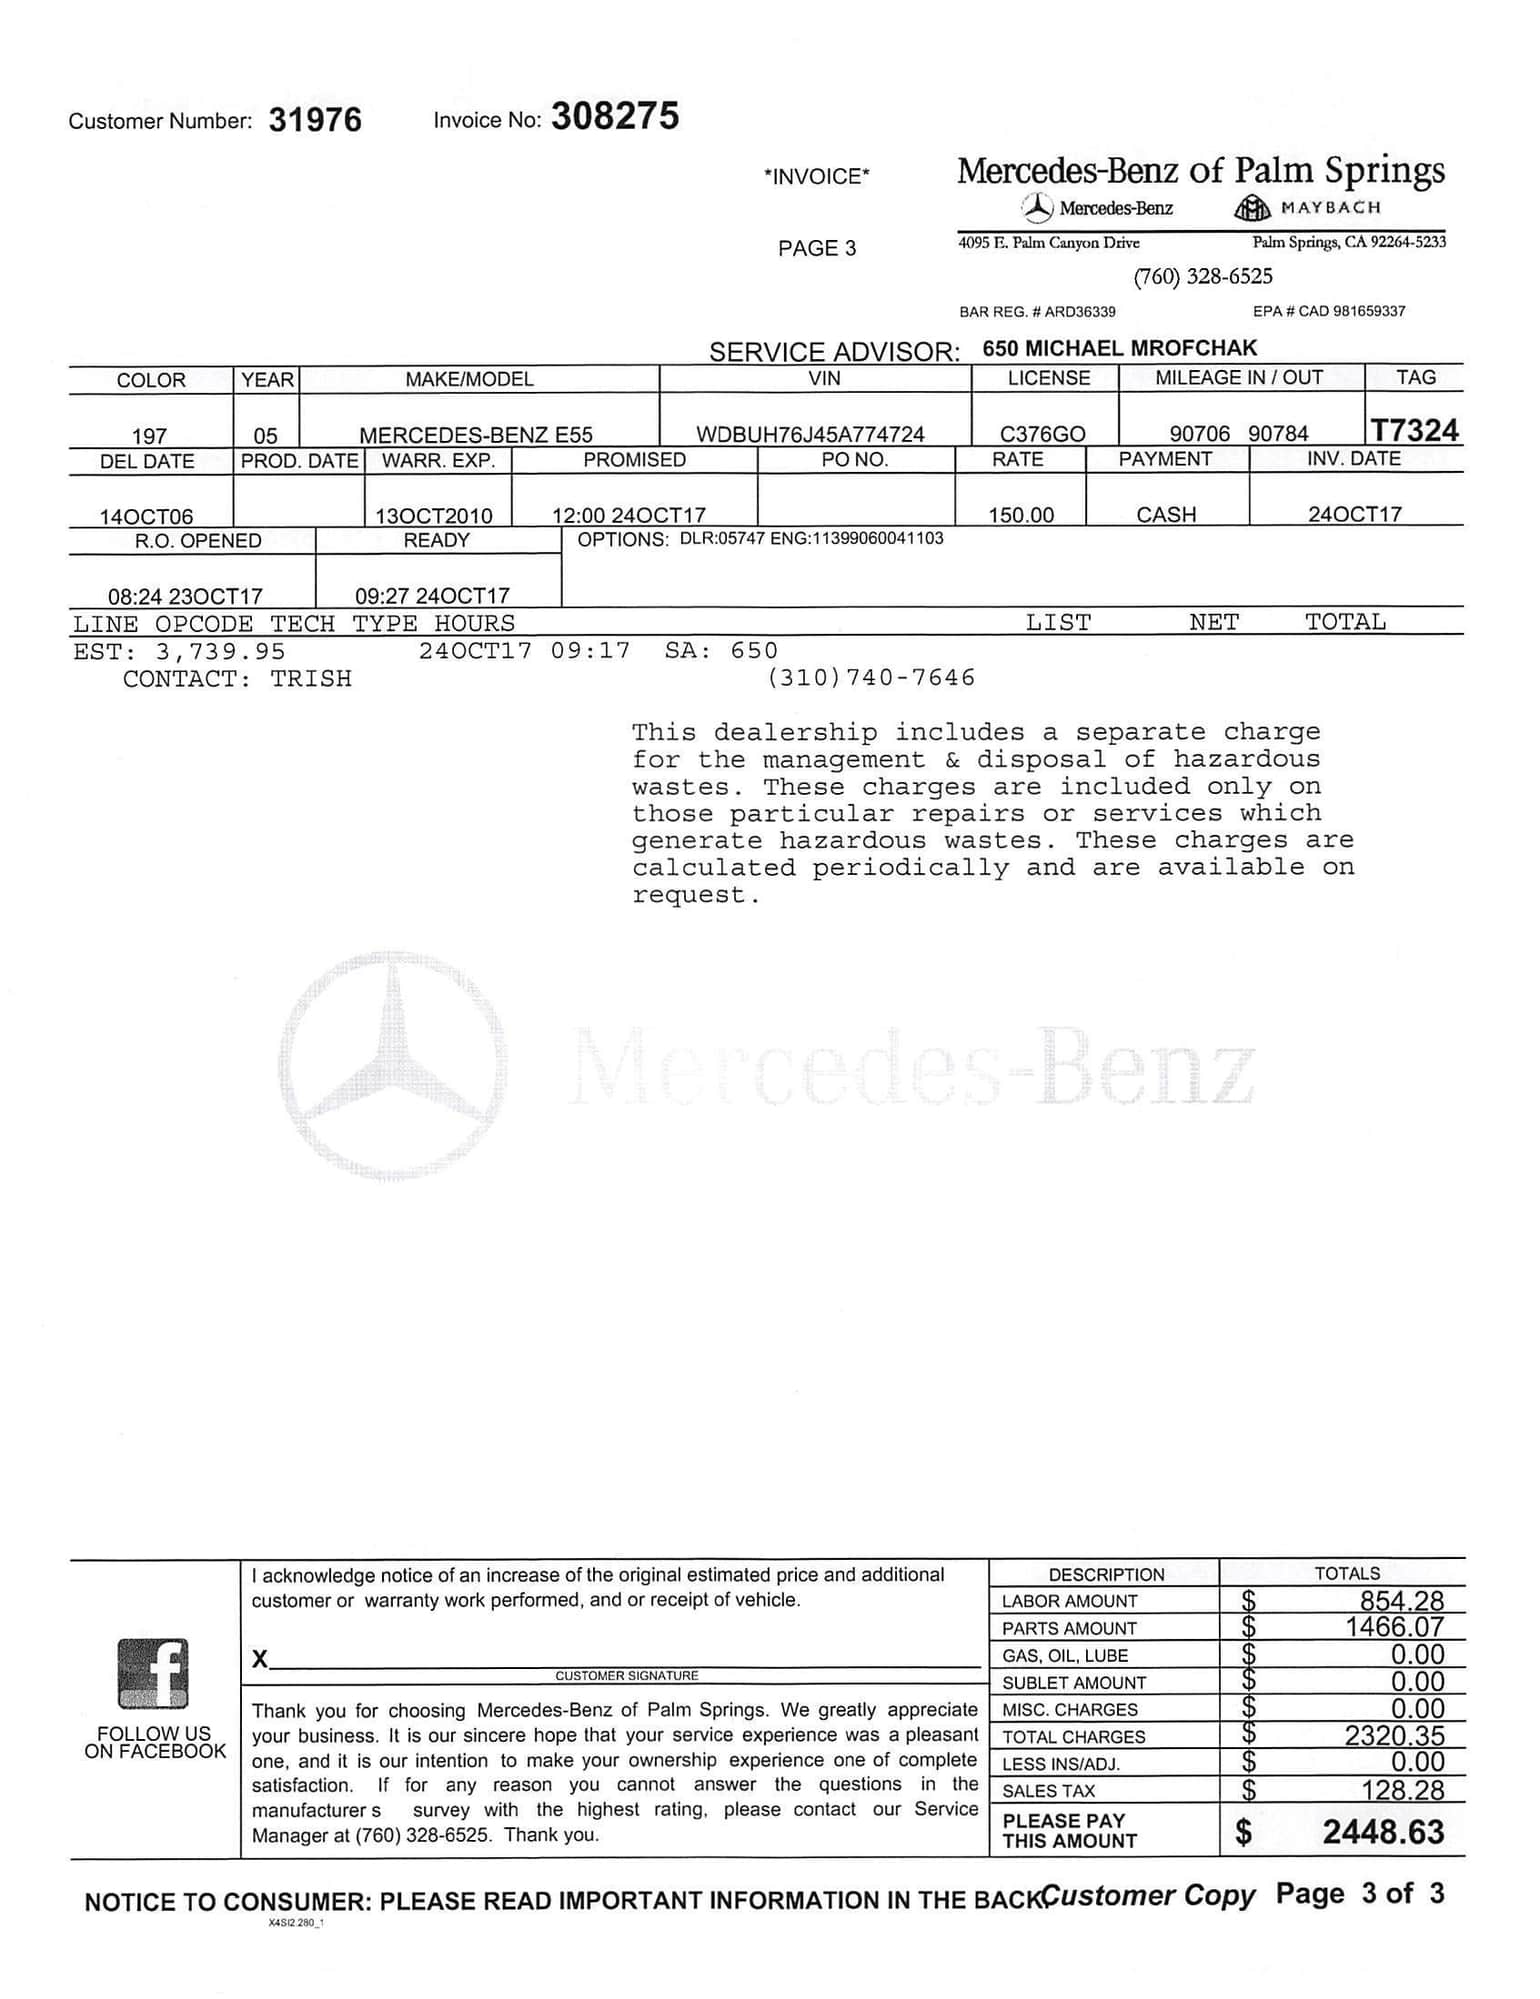 2005 Mercedes-Benz E55 AMG - 2005 Mercedes Benz E55 AMG Wagon - Used - VIN WDBUH76J45A774724 - 8 cyl - 2WD - Automatic - Wagon - Black - Fresno, CA 93730, United States